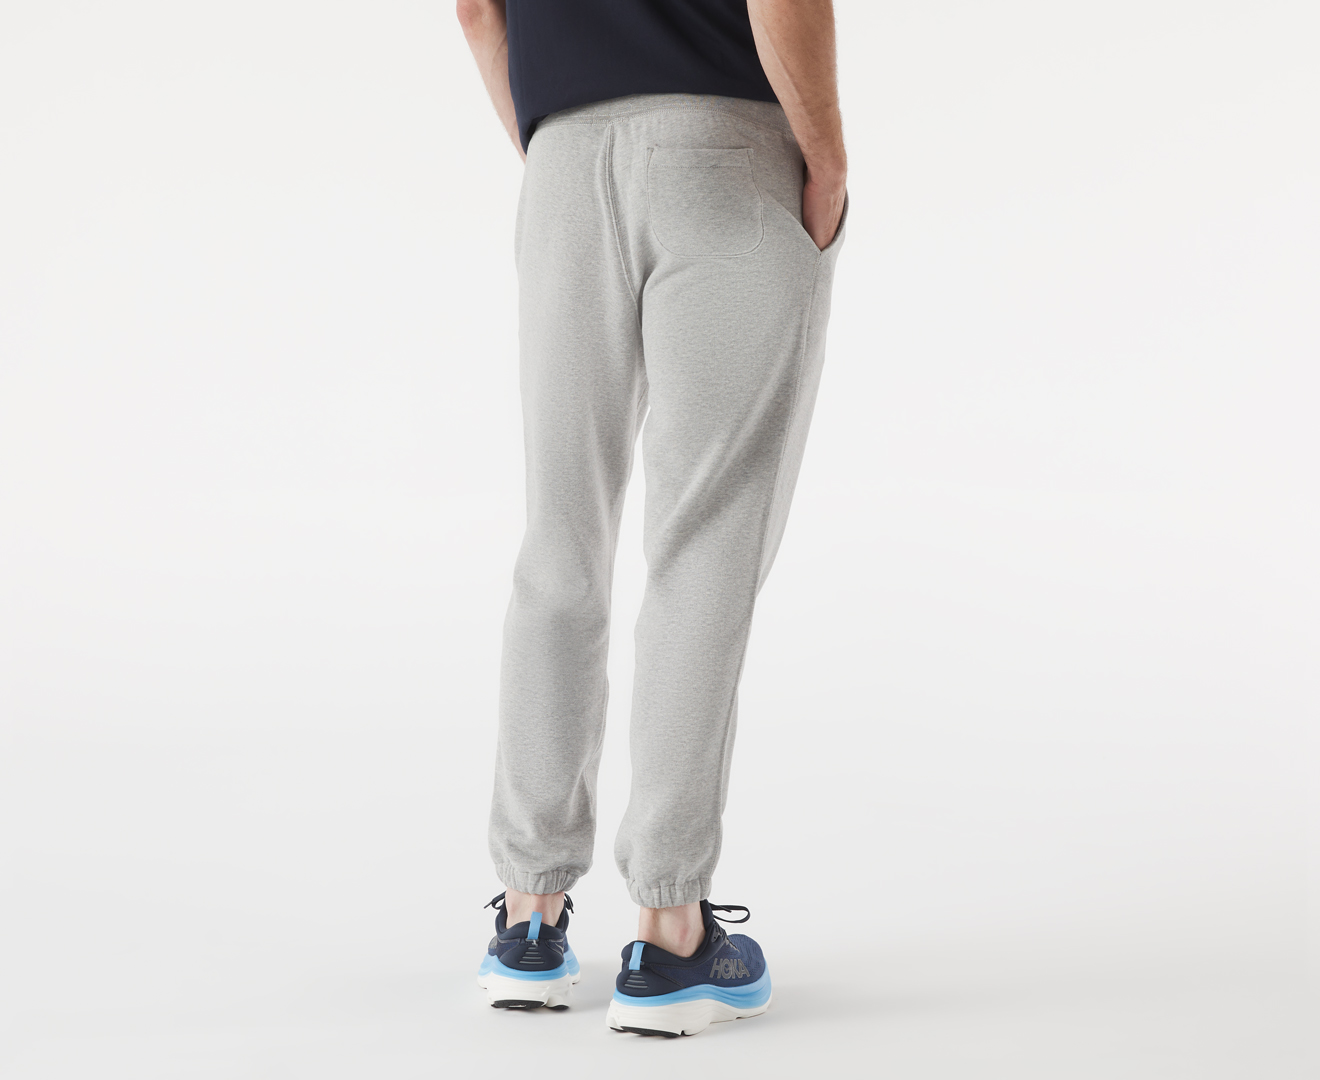 Polo Ralph Lauren Jogging bottoms for Men, Online Sale up to 60% off